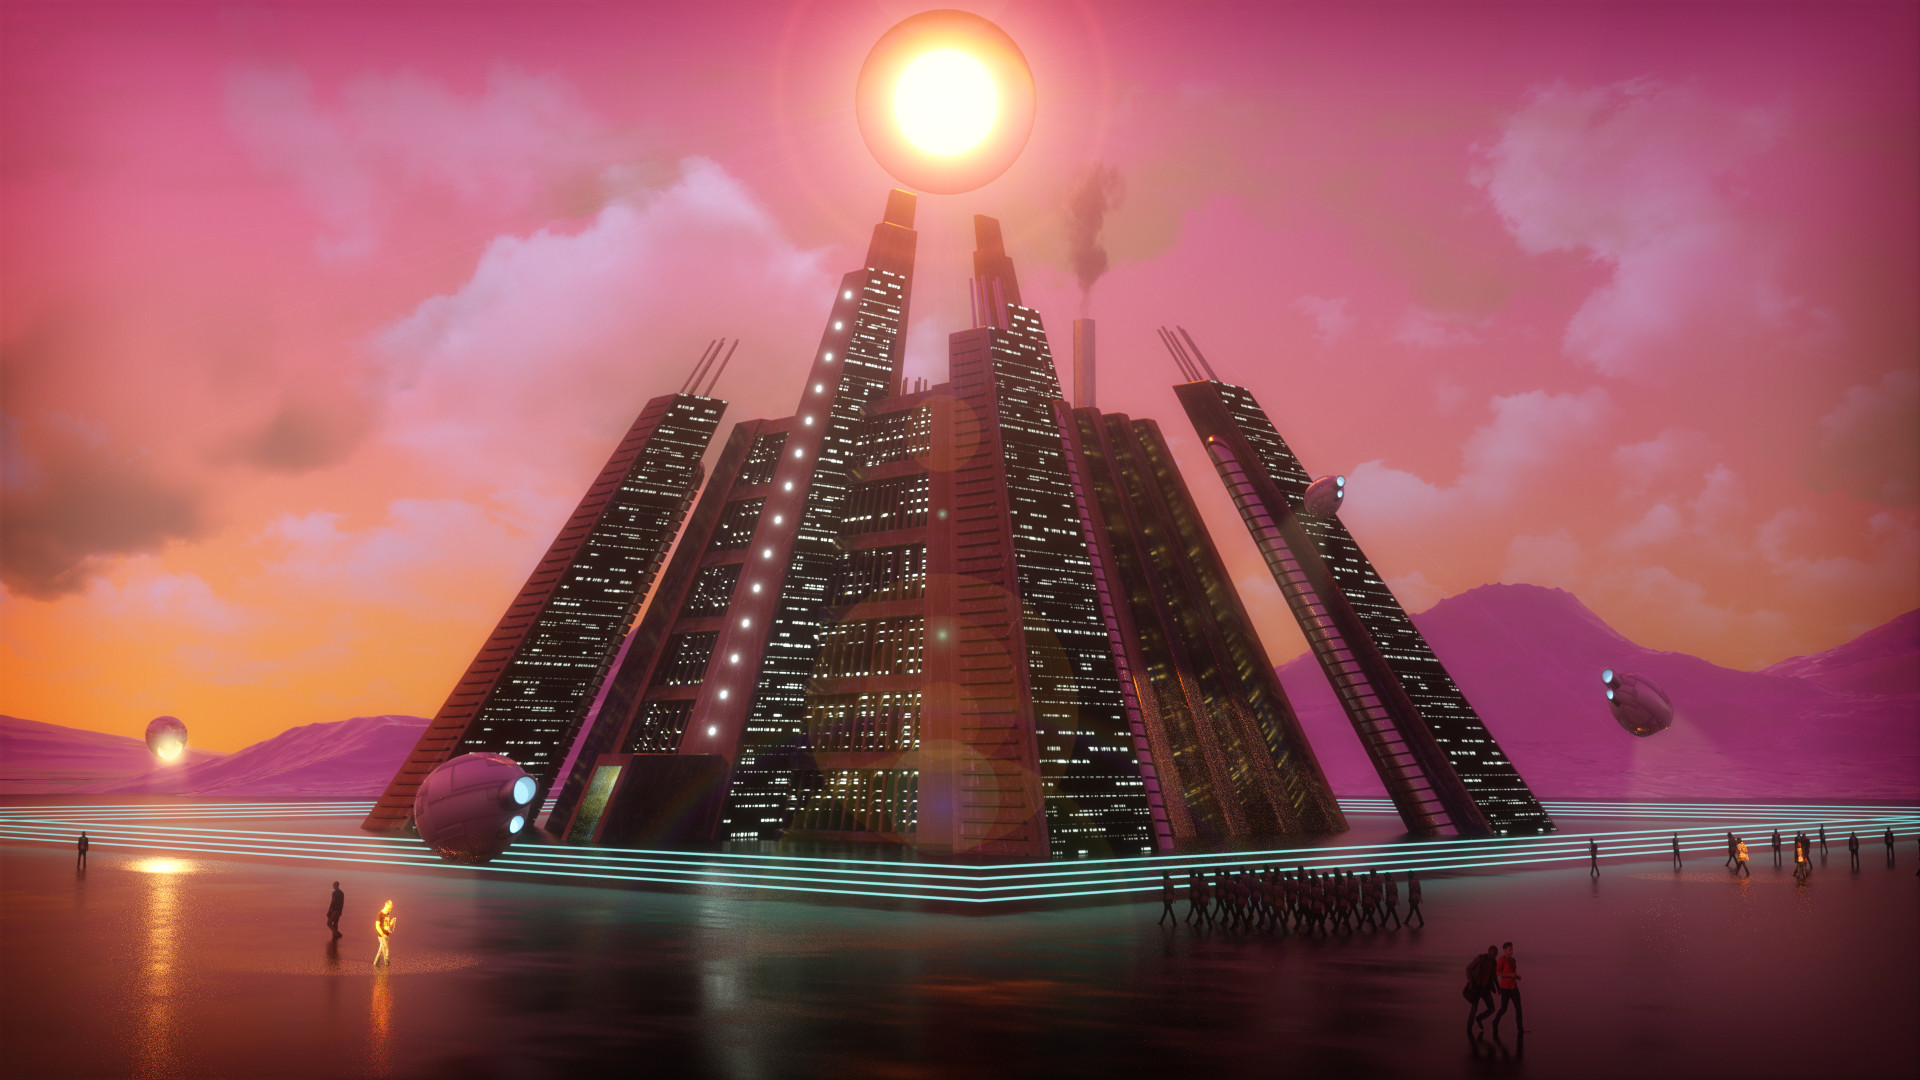 David Legnon Power Plant Cyberpunk People Bright Pyramid Clouds Red Sky Science Fiction Futuristic B 1920x1080